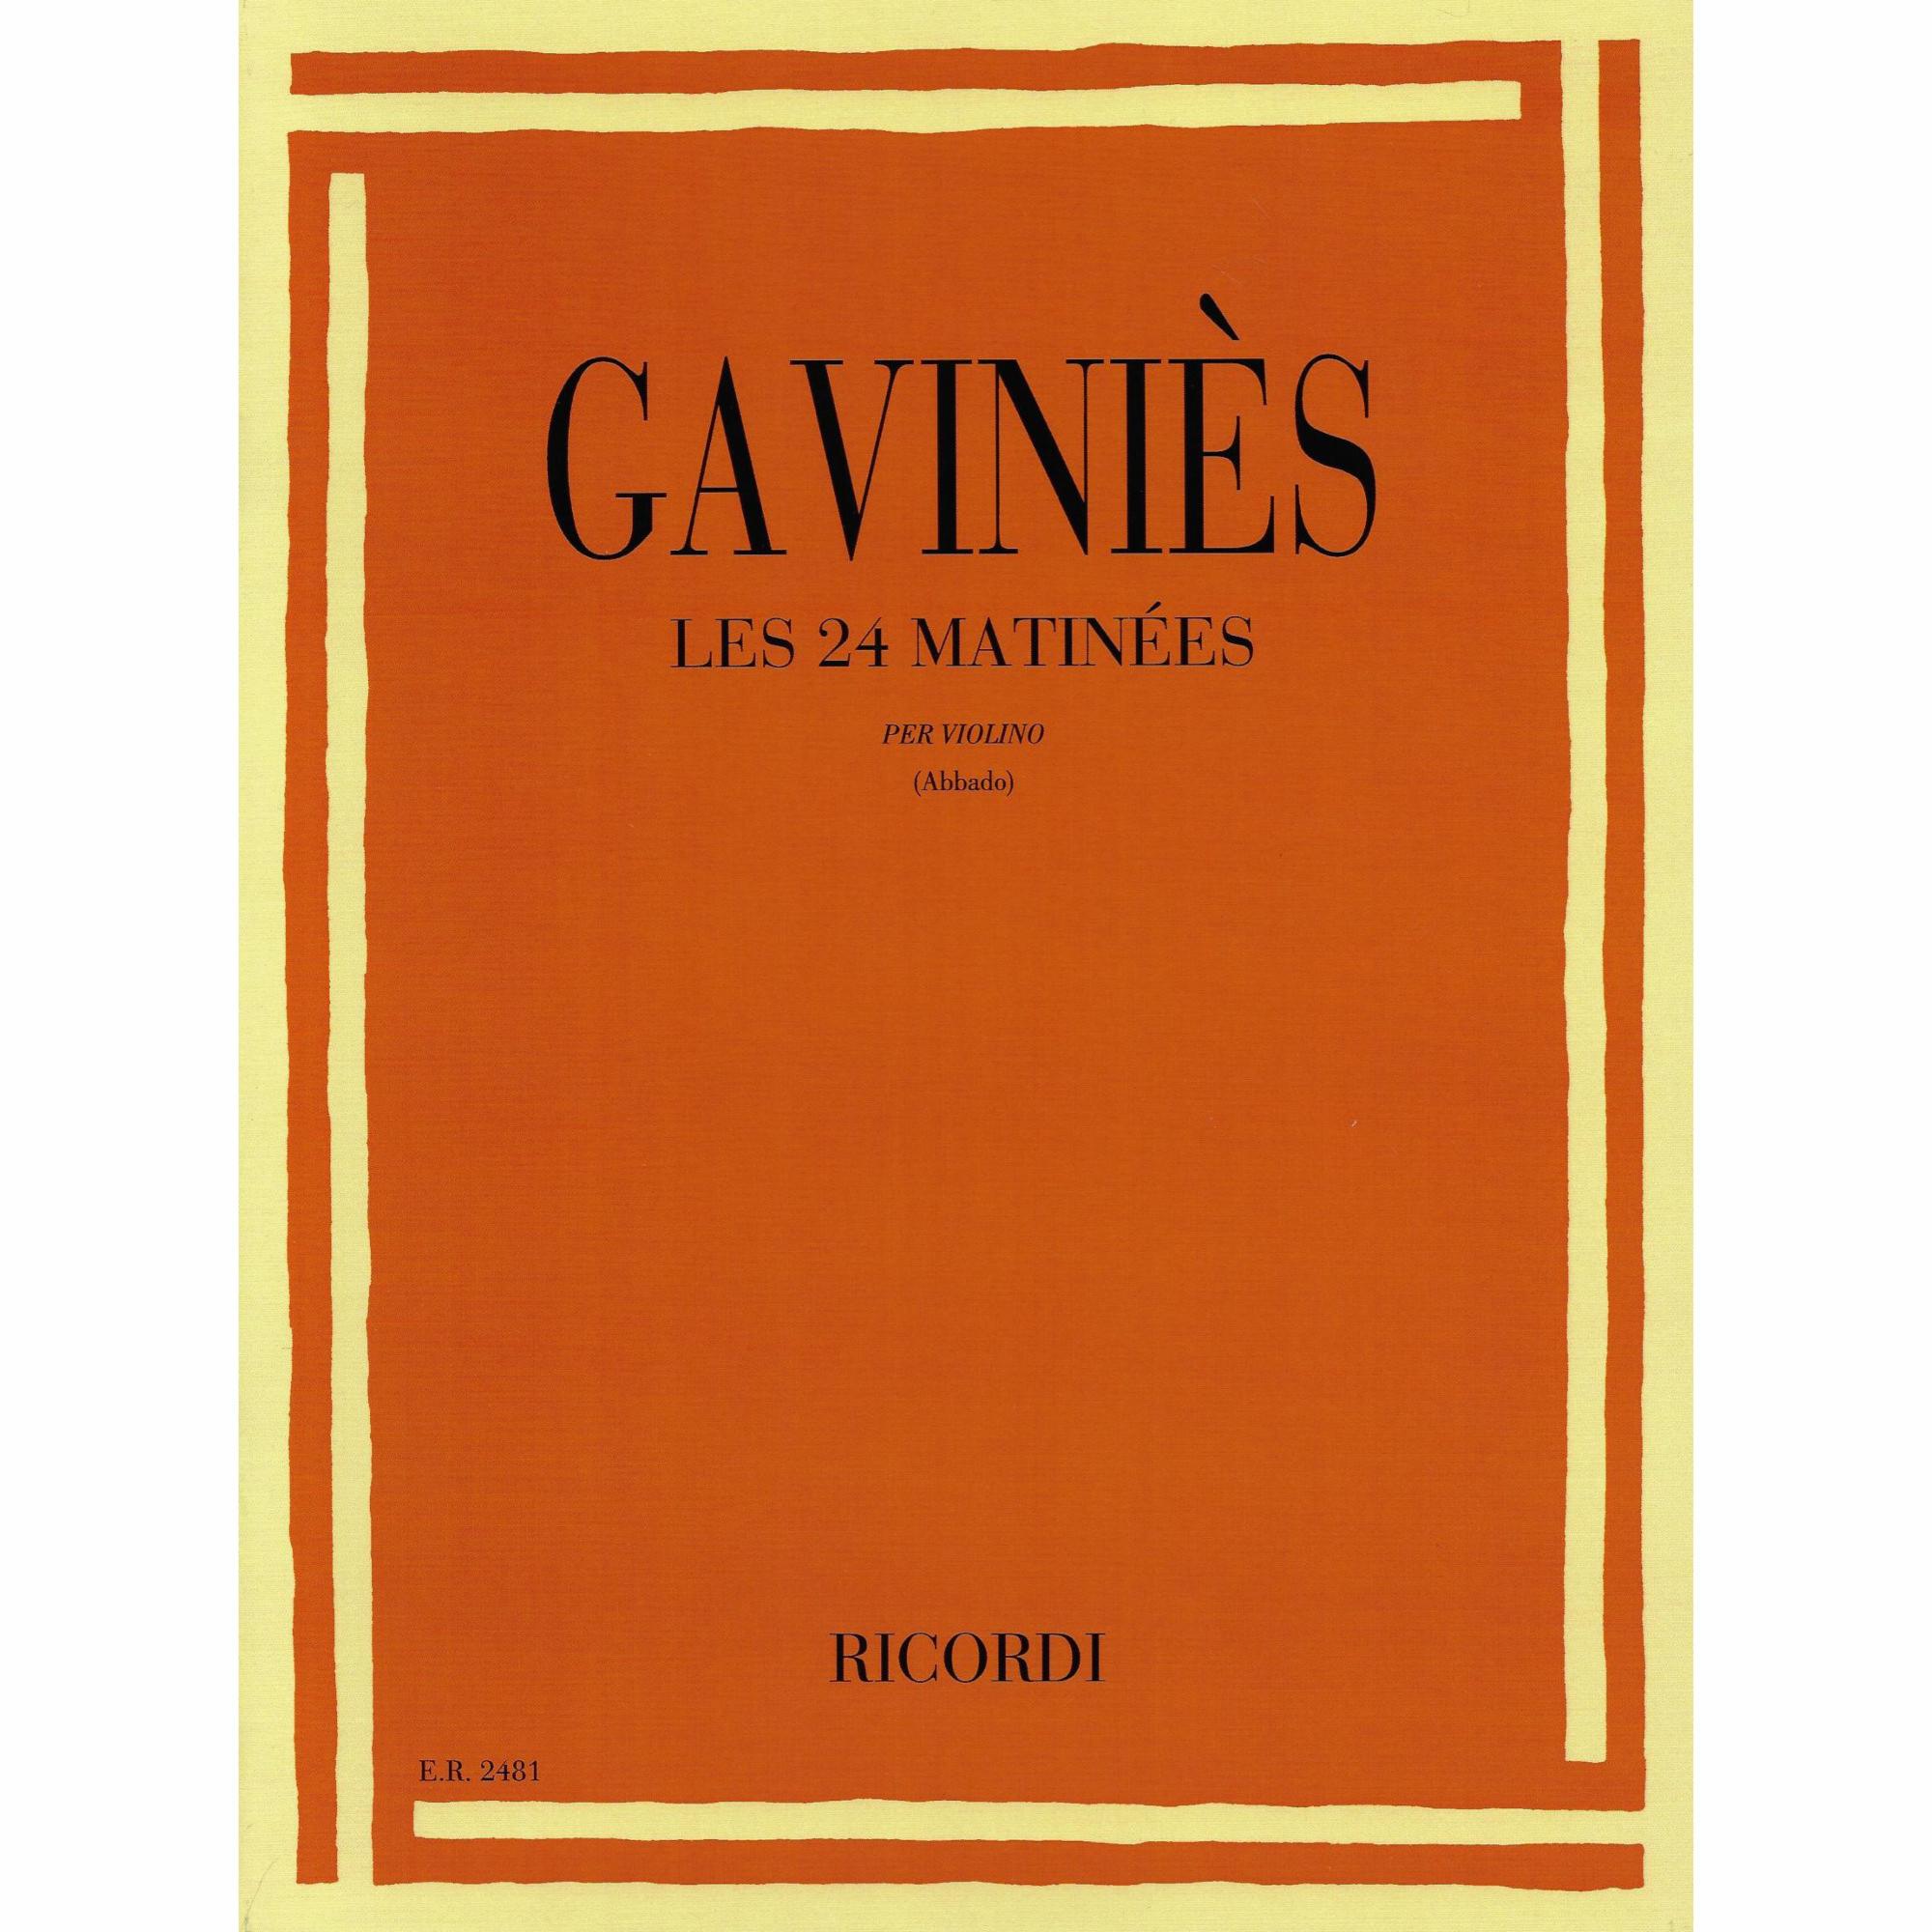 Gavinies -- 24 Matinees for Violin